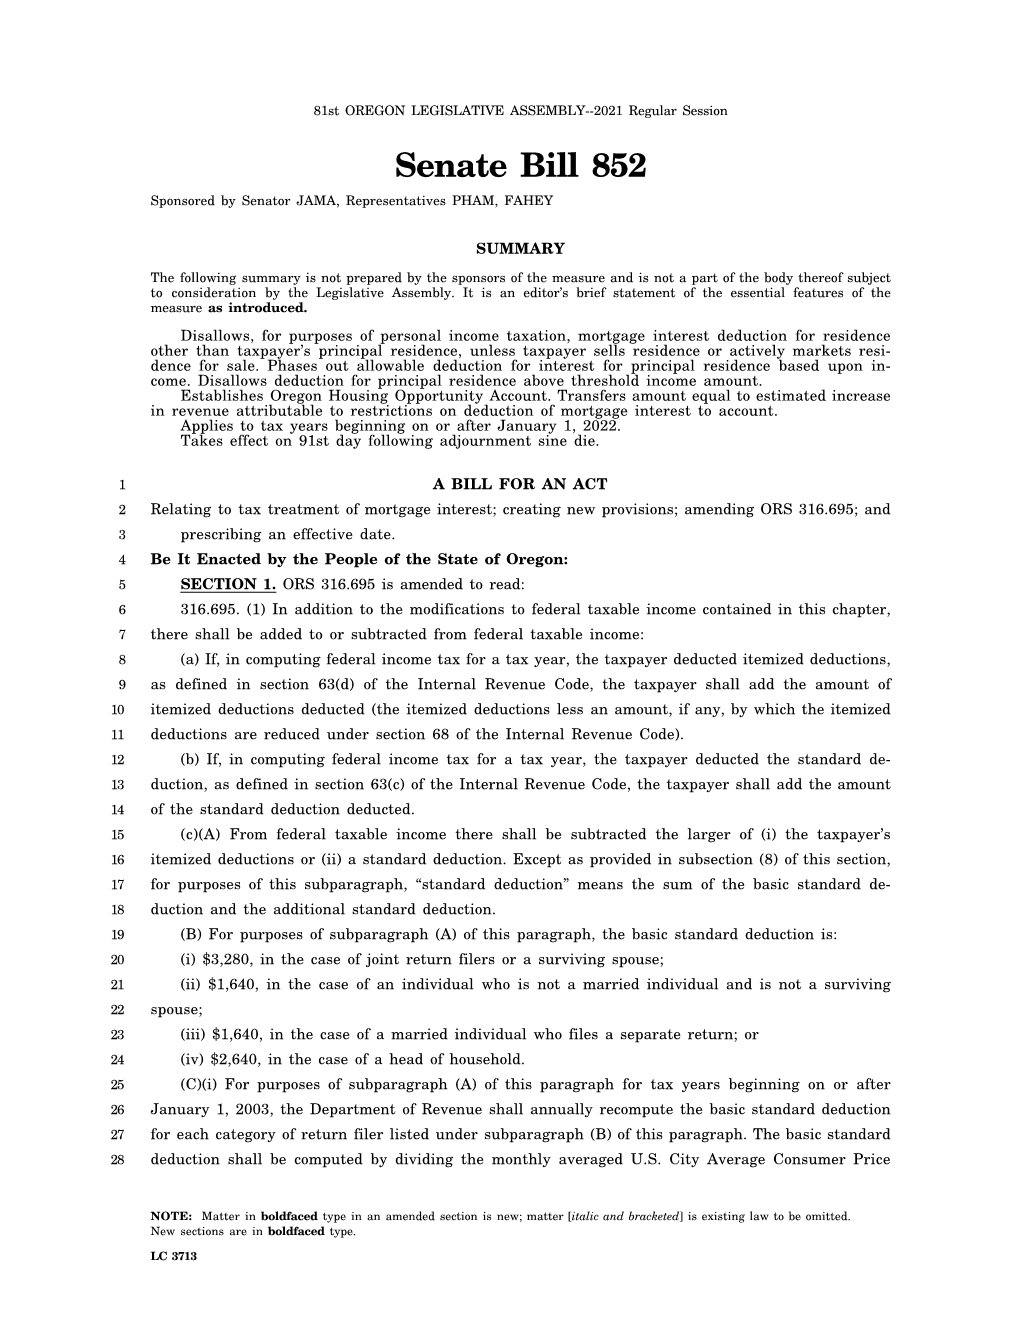 Senate Bill 852 Sponsored by Senator JAMA, Representatives PHAM, FAHEY